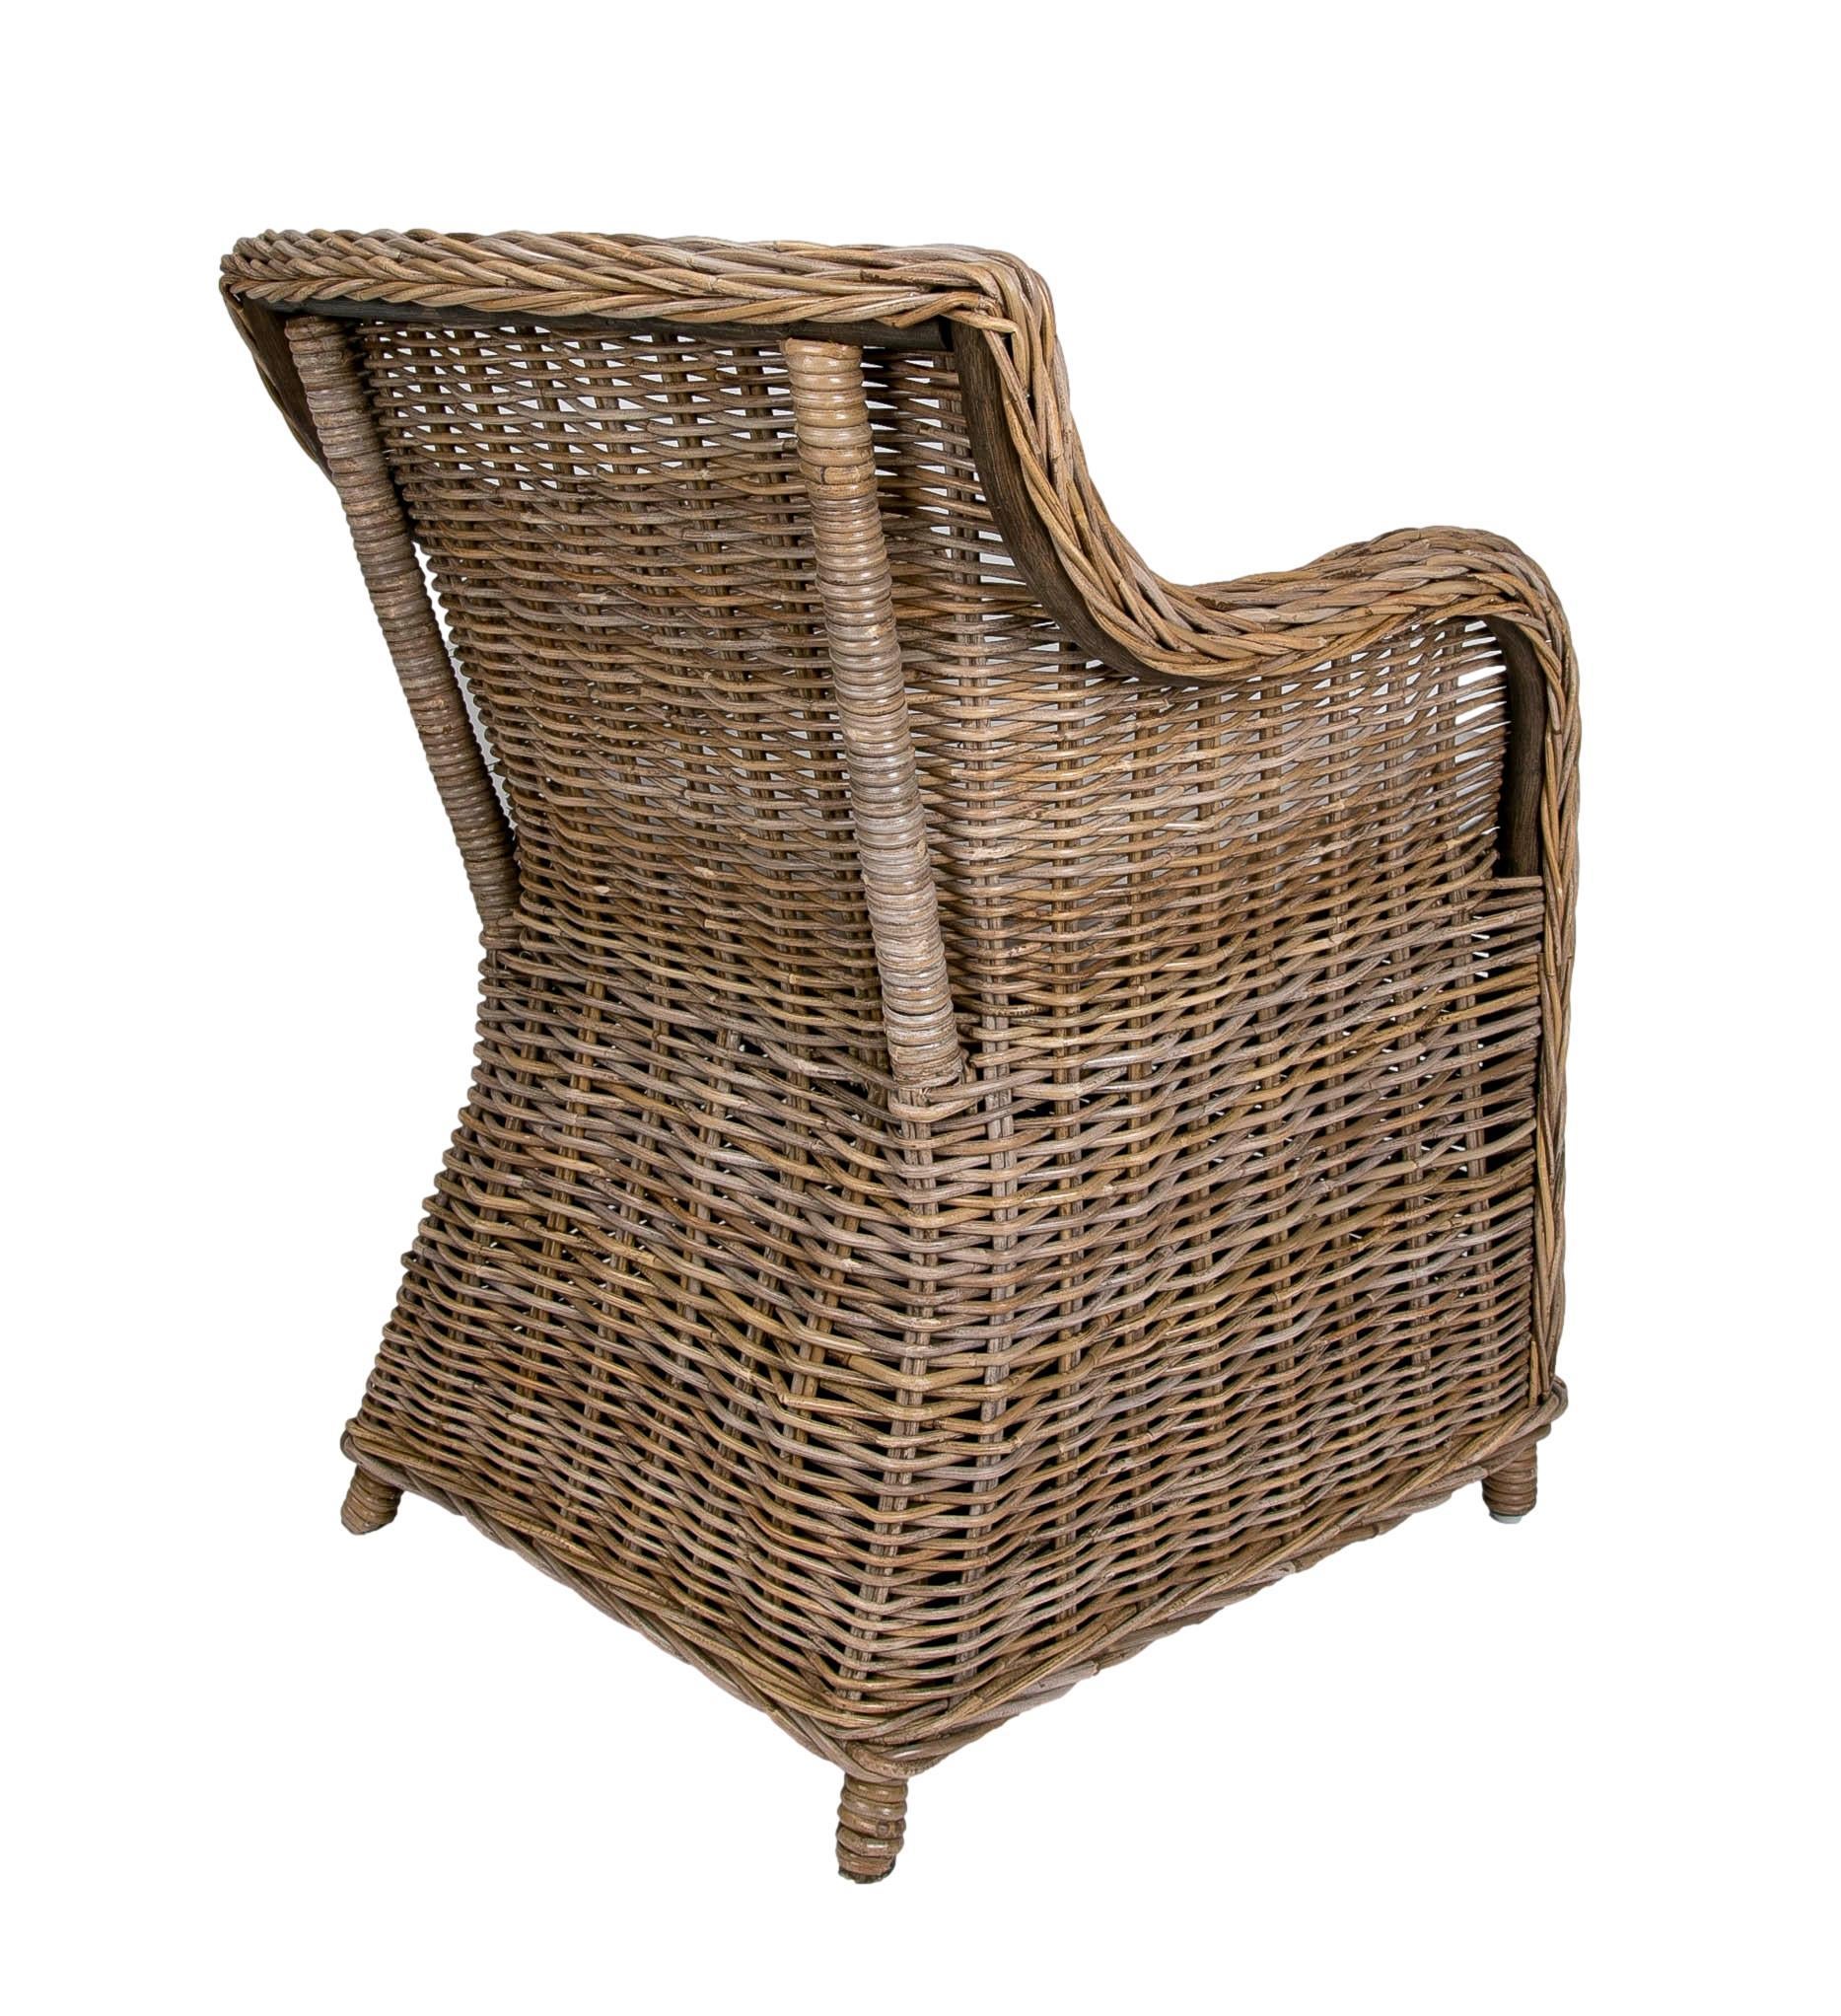  Rattan Garden Chair with Cushion in Greyish Tone For Sale 6